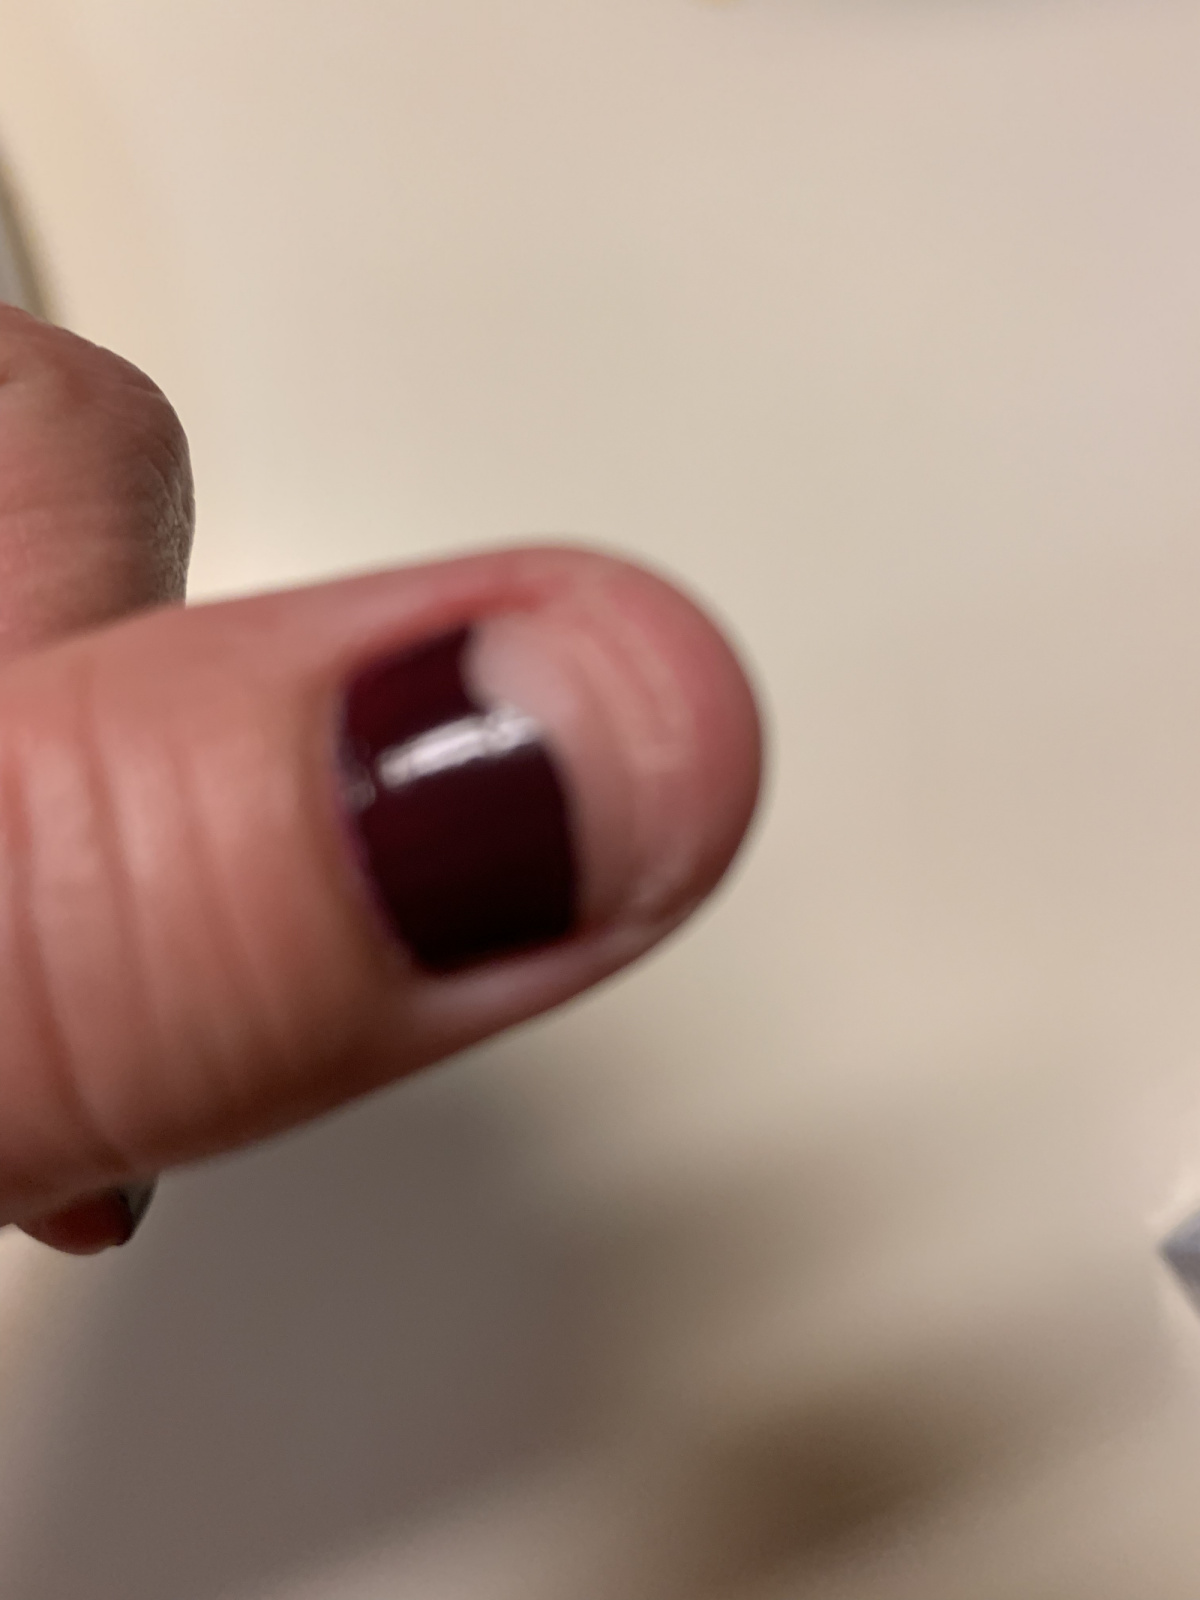 Broken nail from
Chemo.